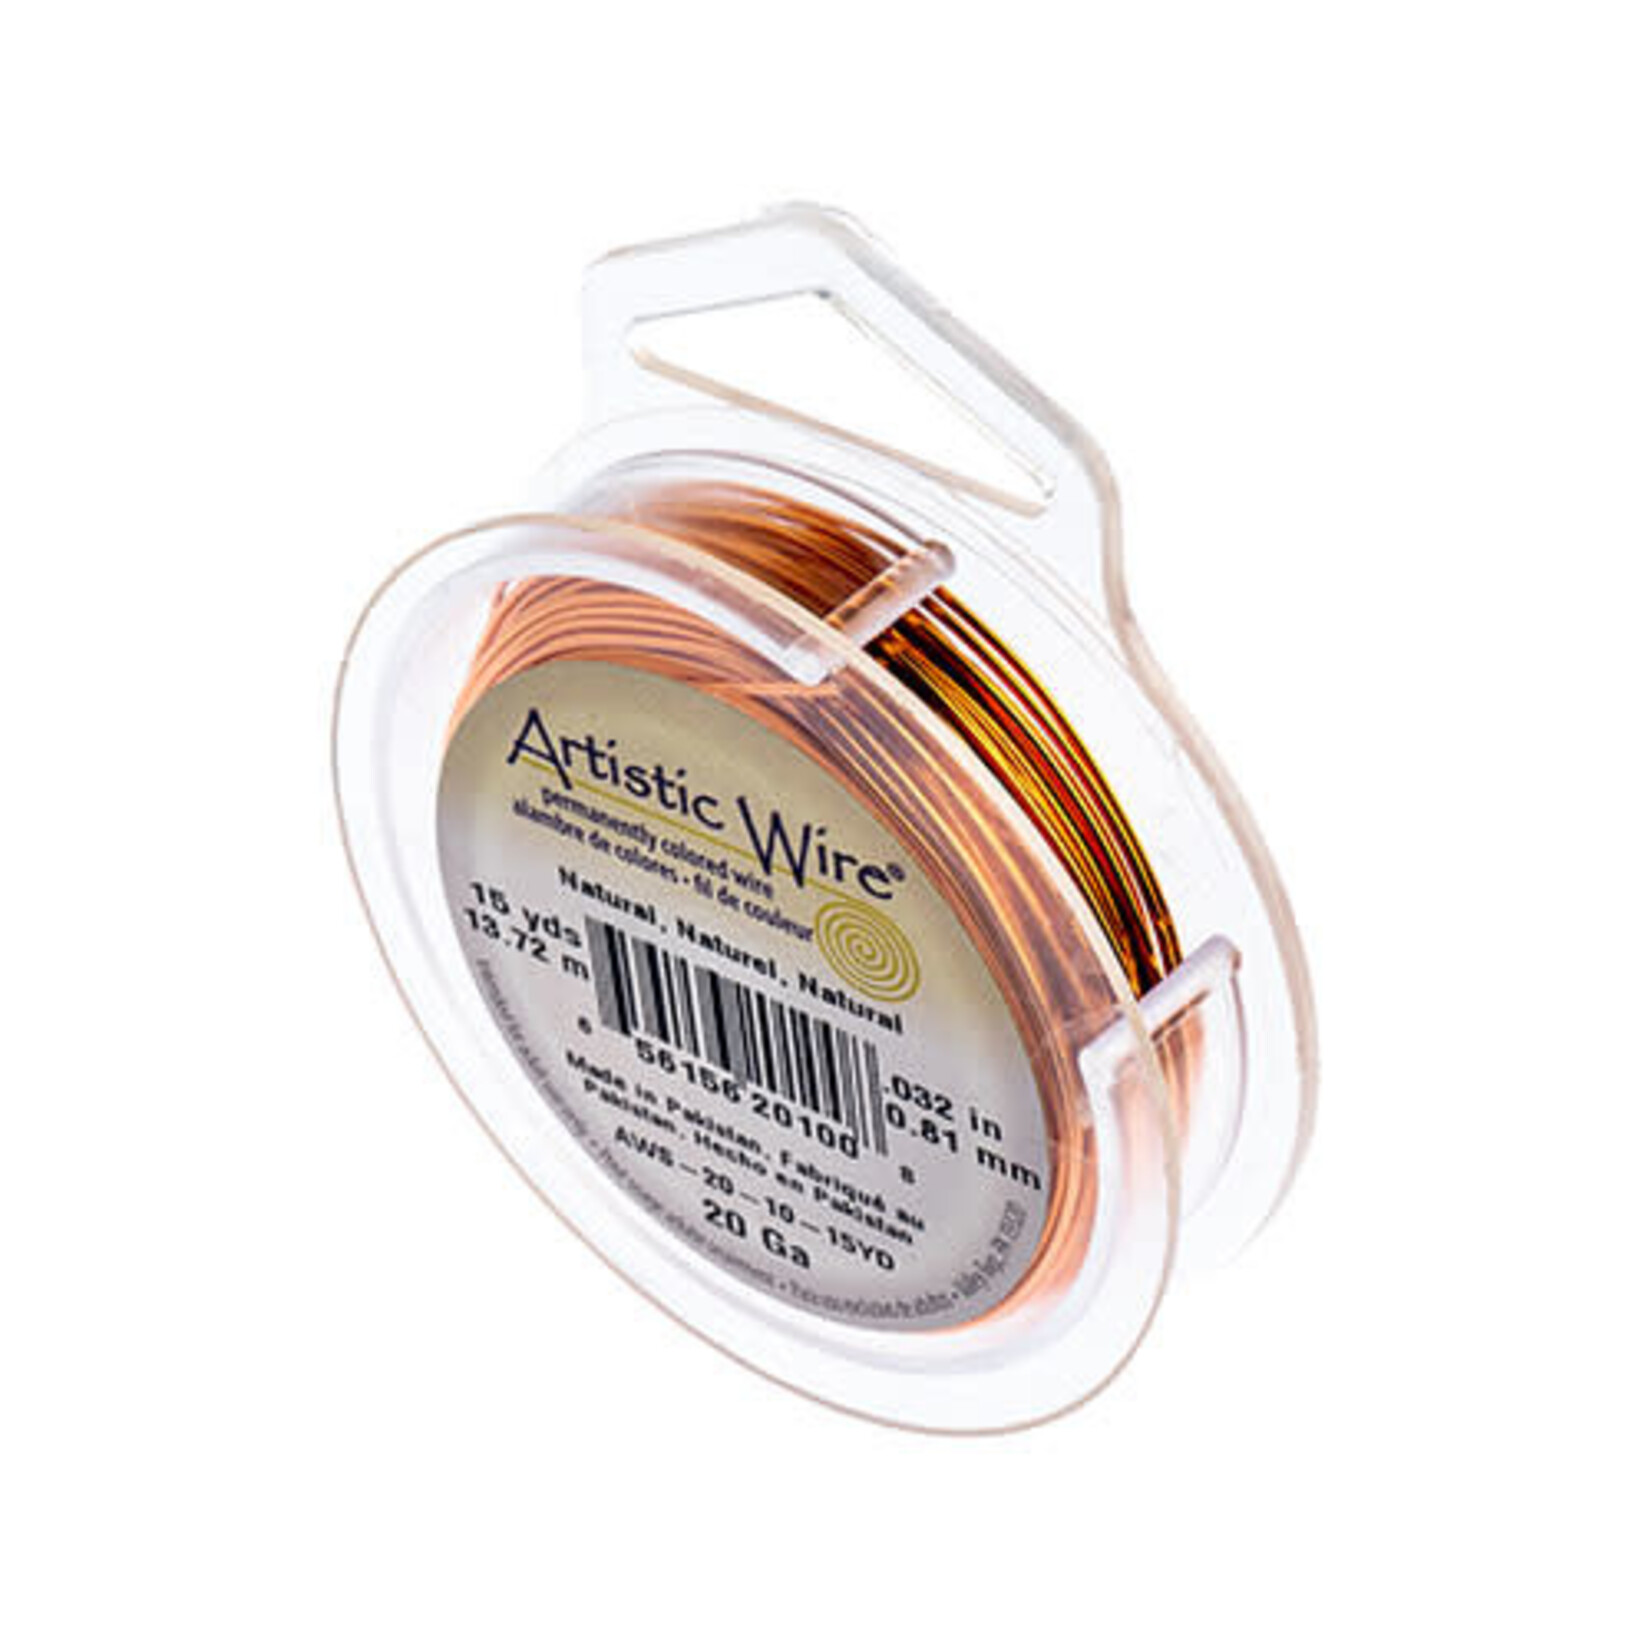 Art Wire 20G Lead/Nickel Natural Copper